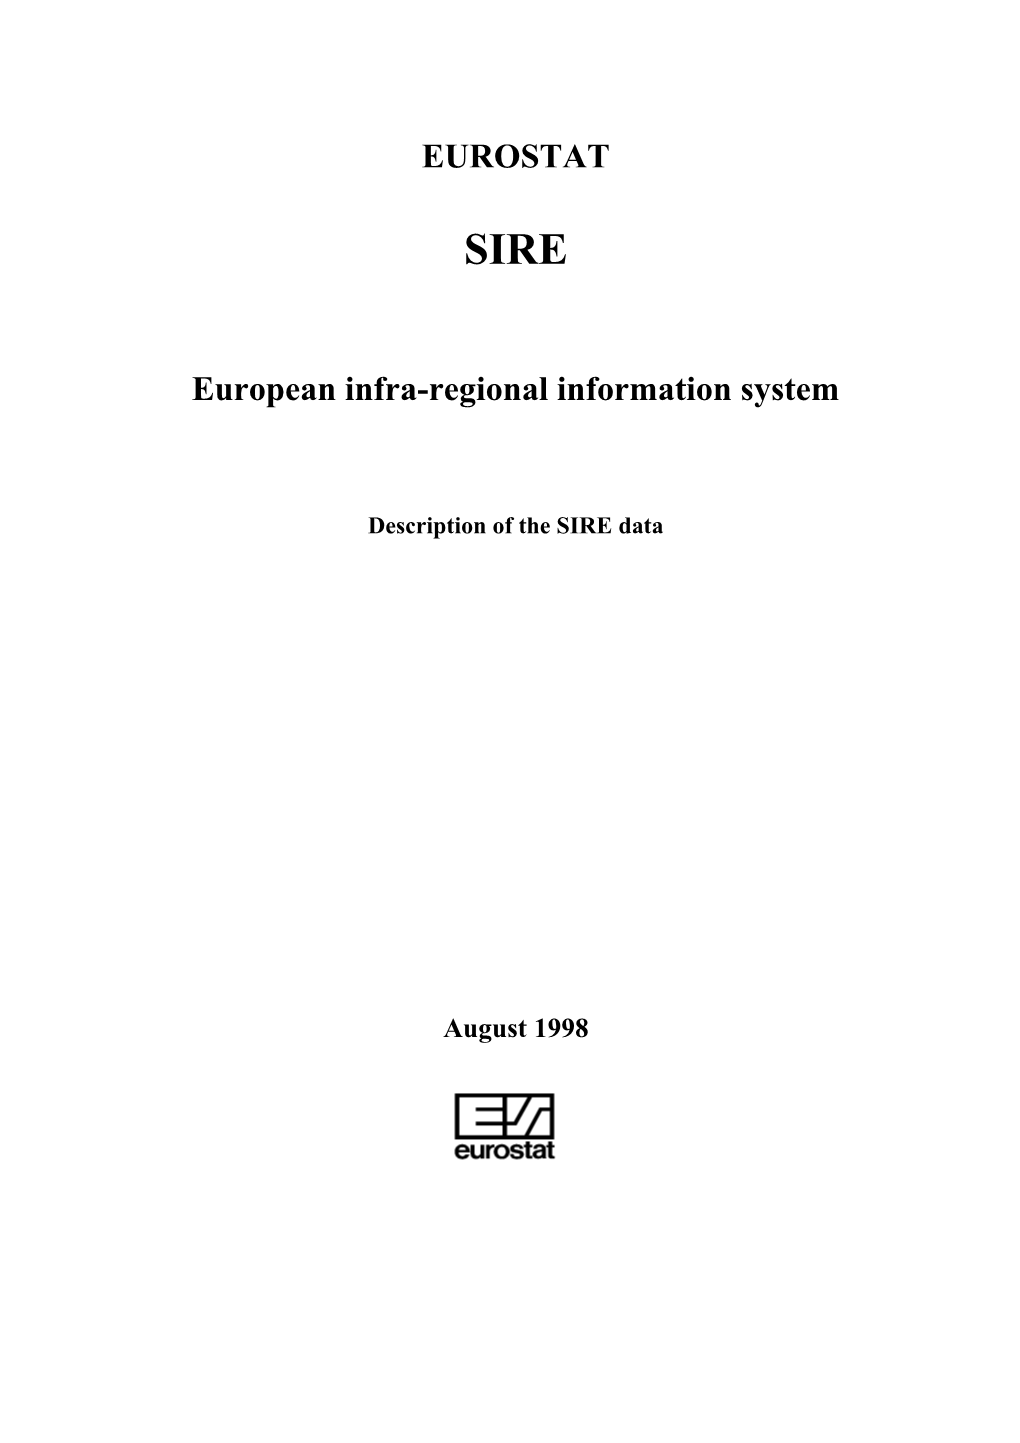 European Infra-Regional Information System